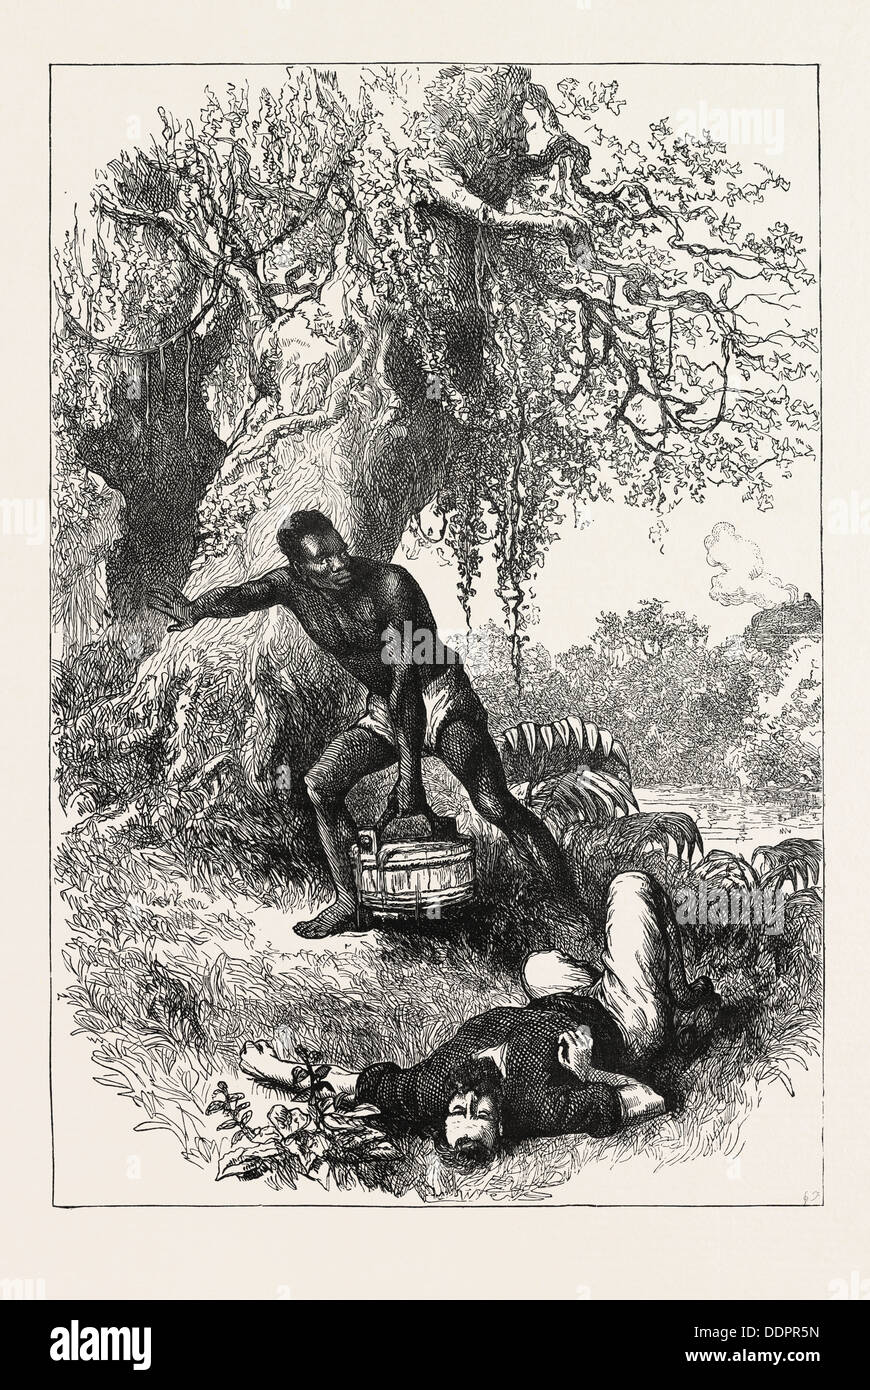 Un incidente in difesa di novantasei, guerra rivoluzionaria americana US, USA, 1870 l'incisione Foto Stock